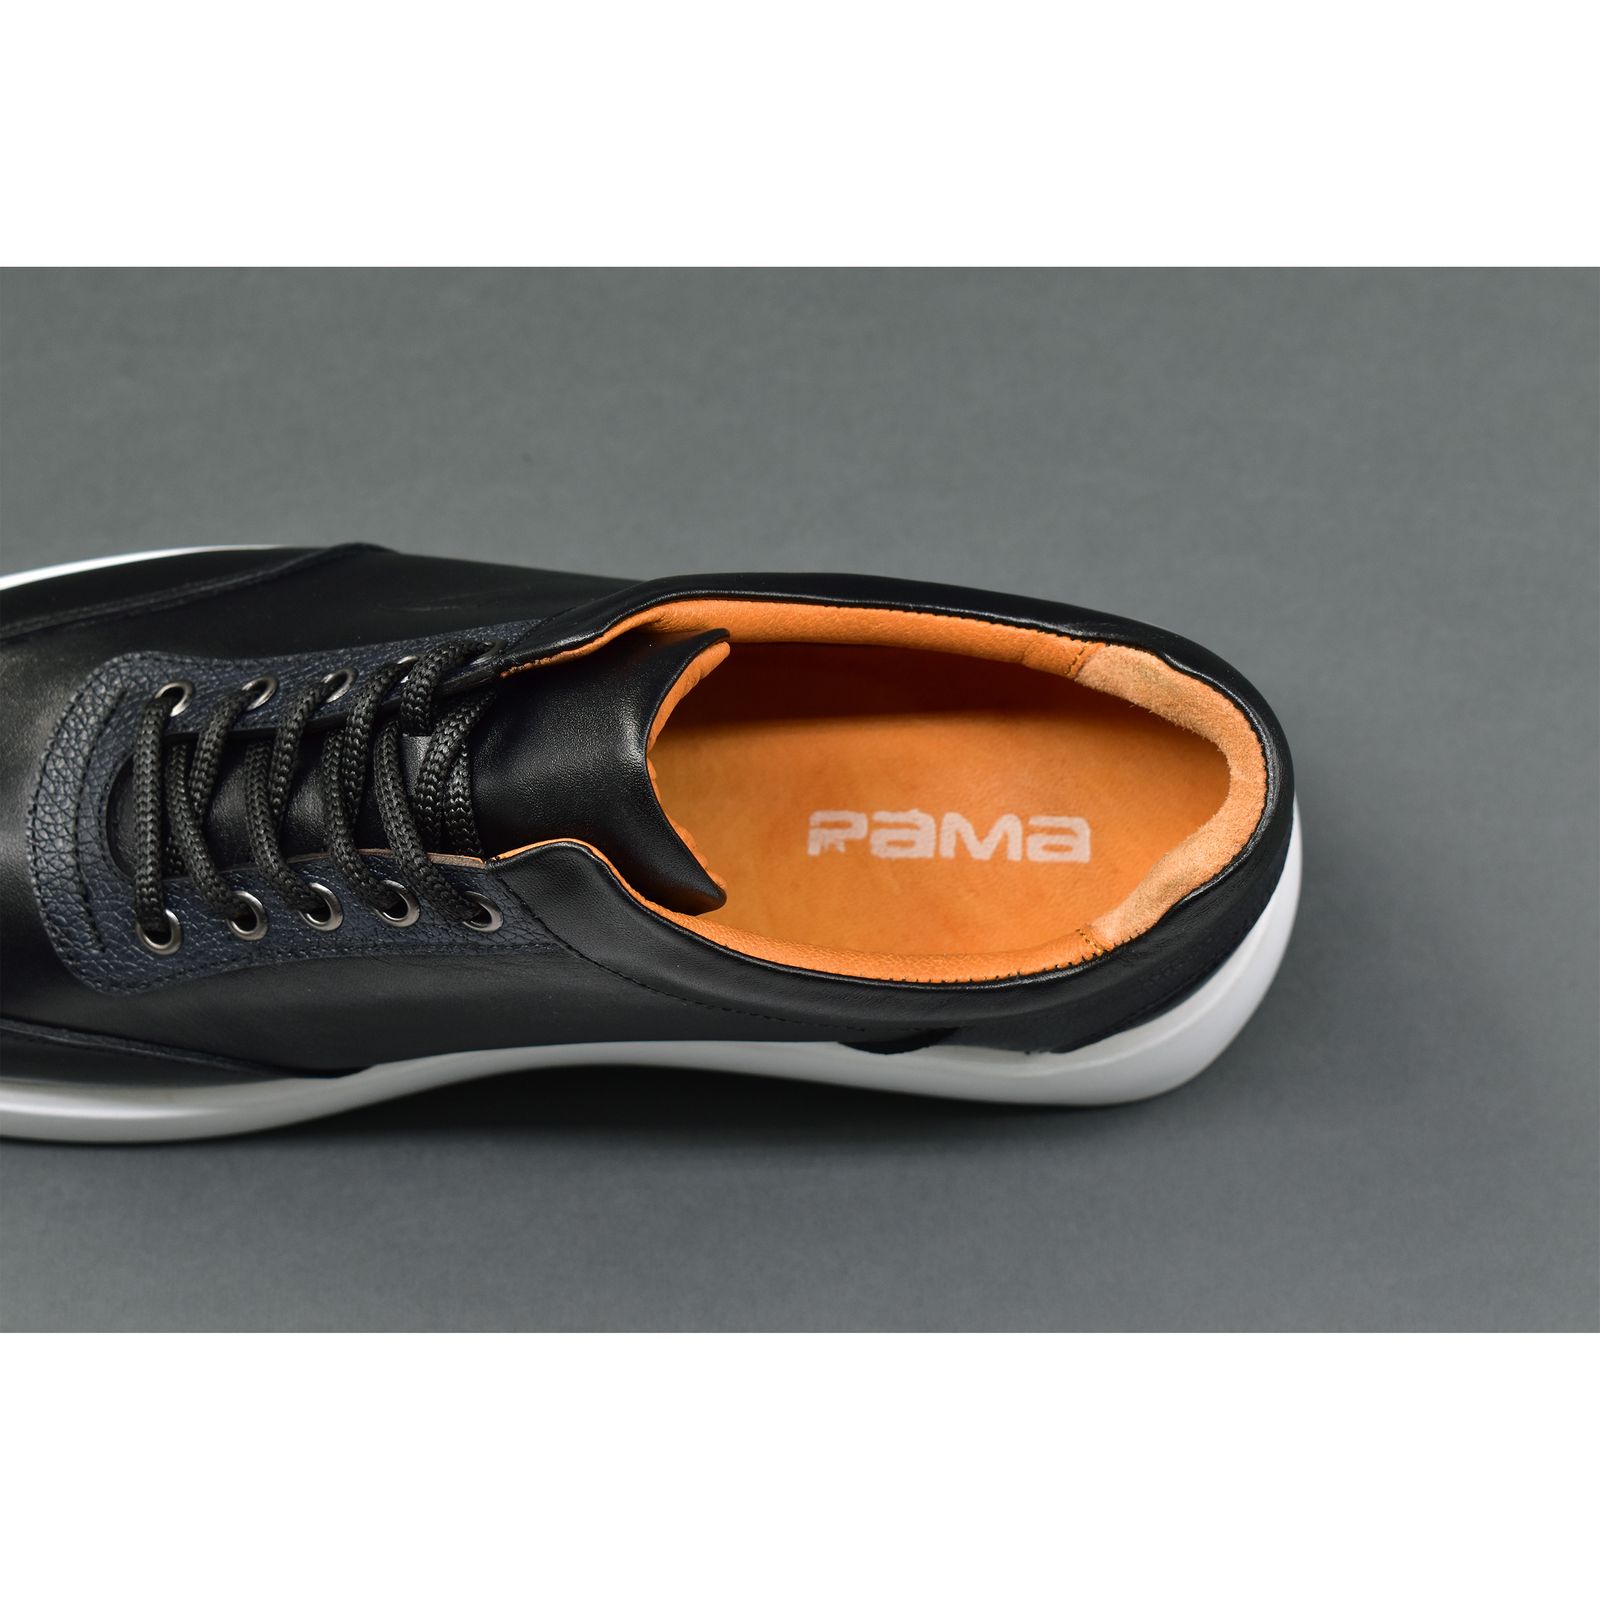 کفش روزمره مردانه پاما مدل ME-403 کد G1805 -  - 7